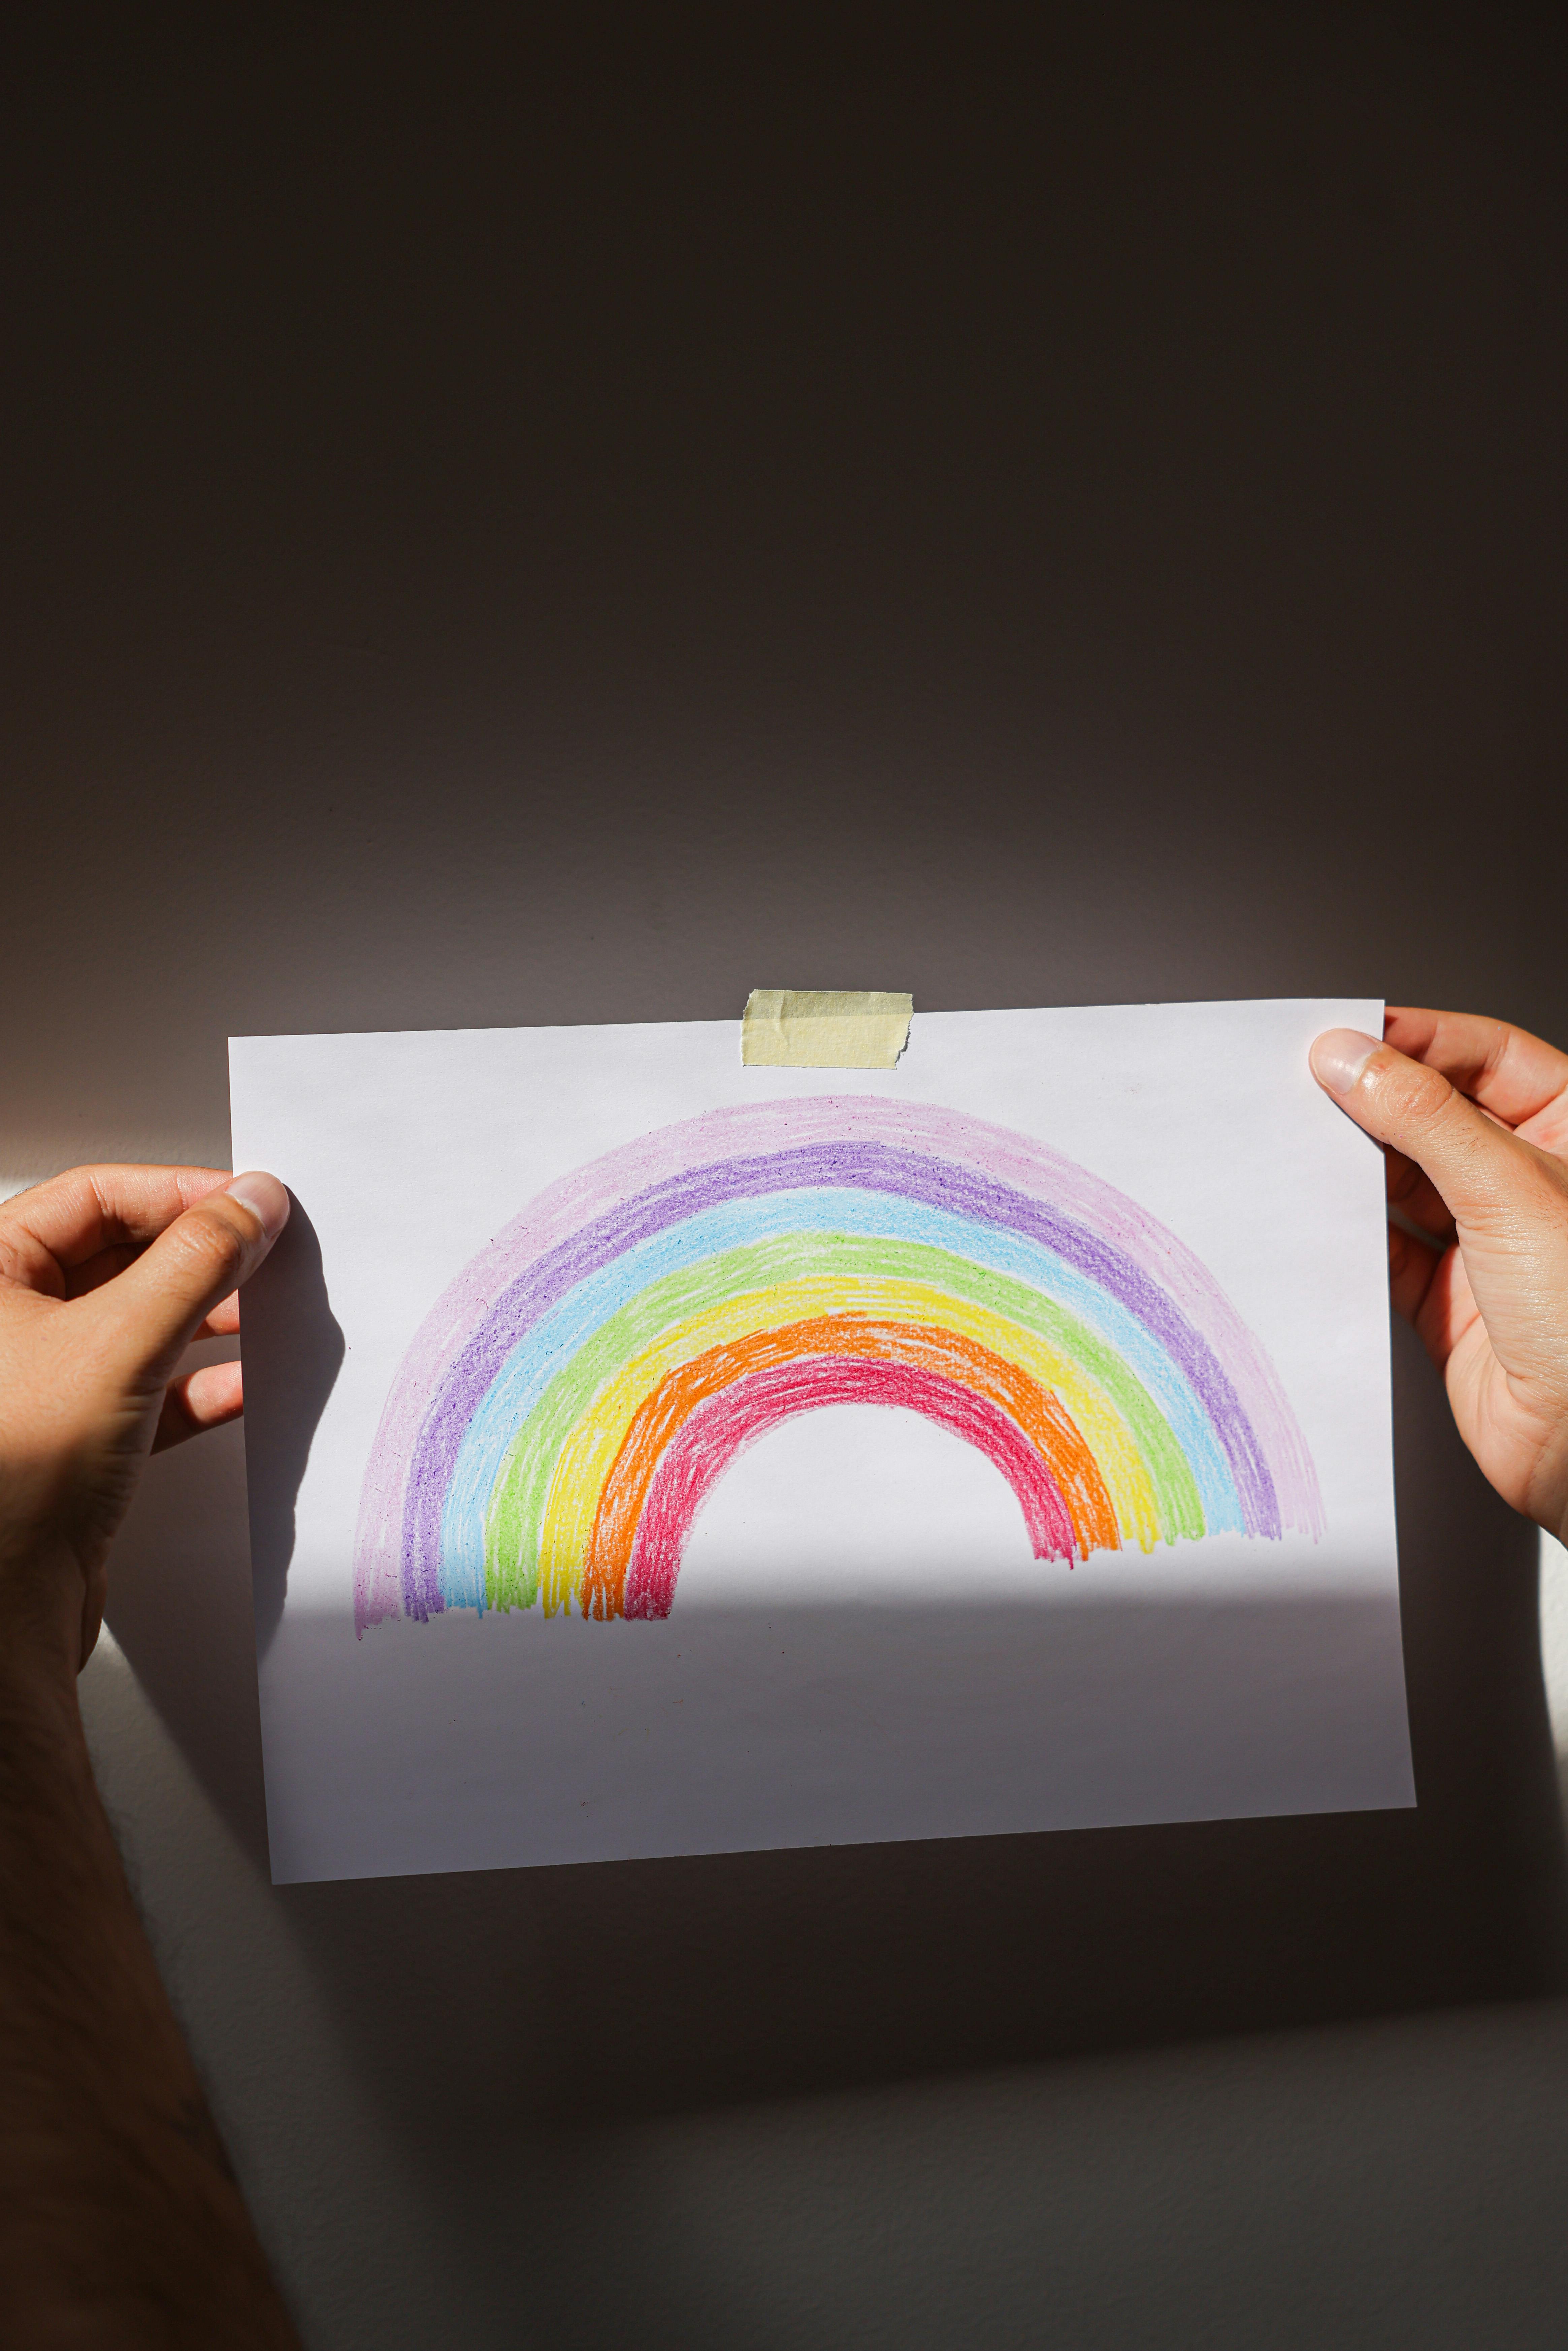 How to draw a Rainbow || Rainbow art for kids - YouTube